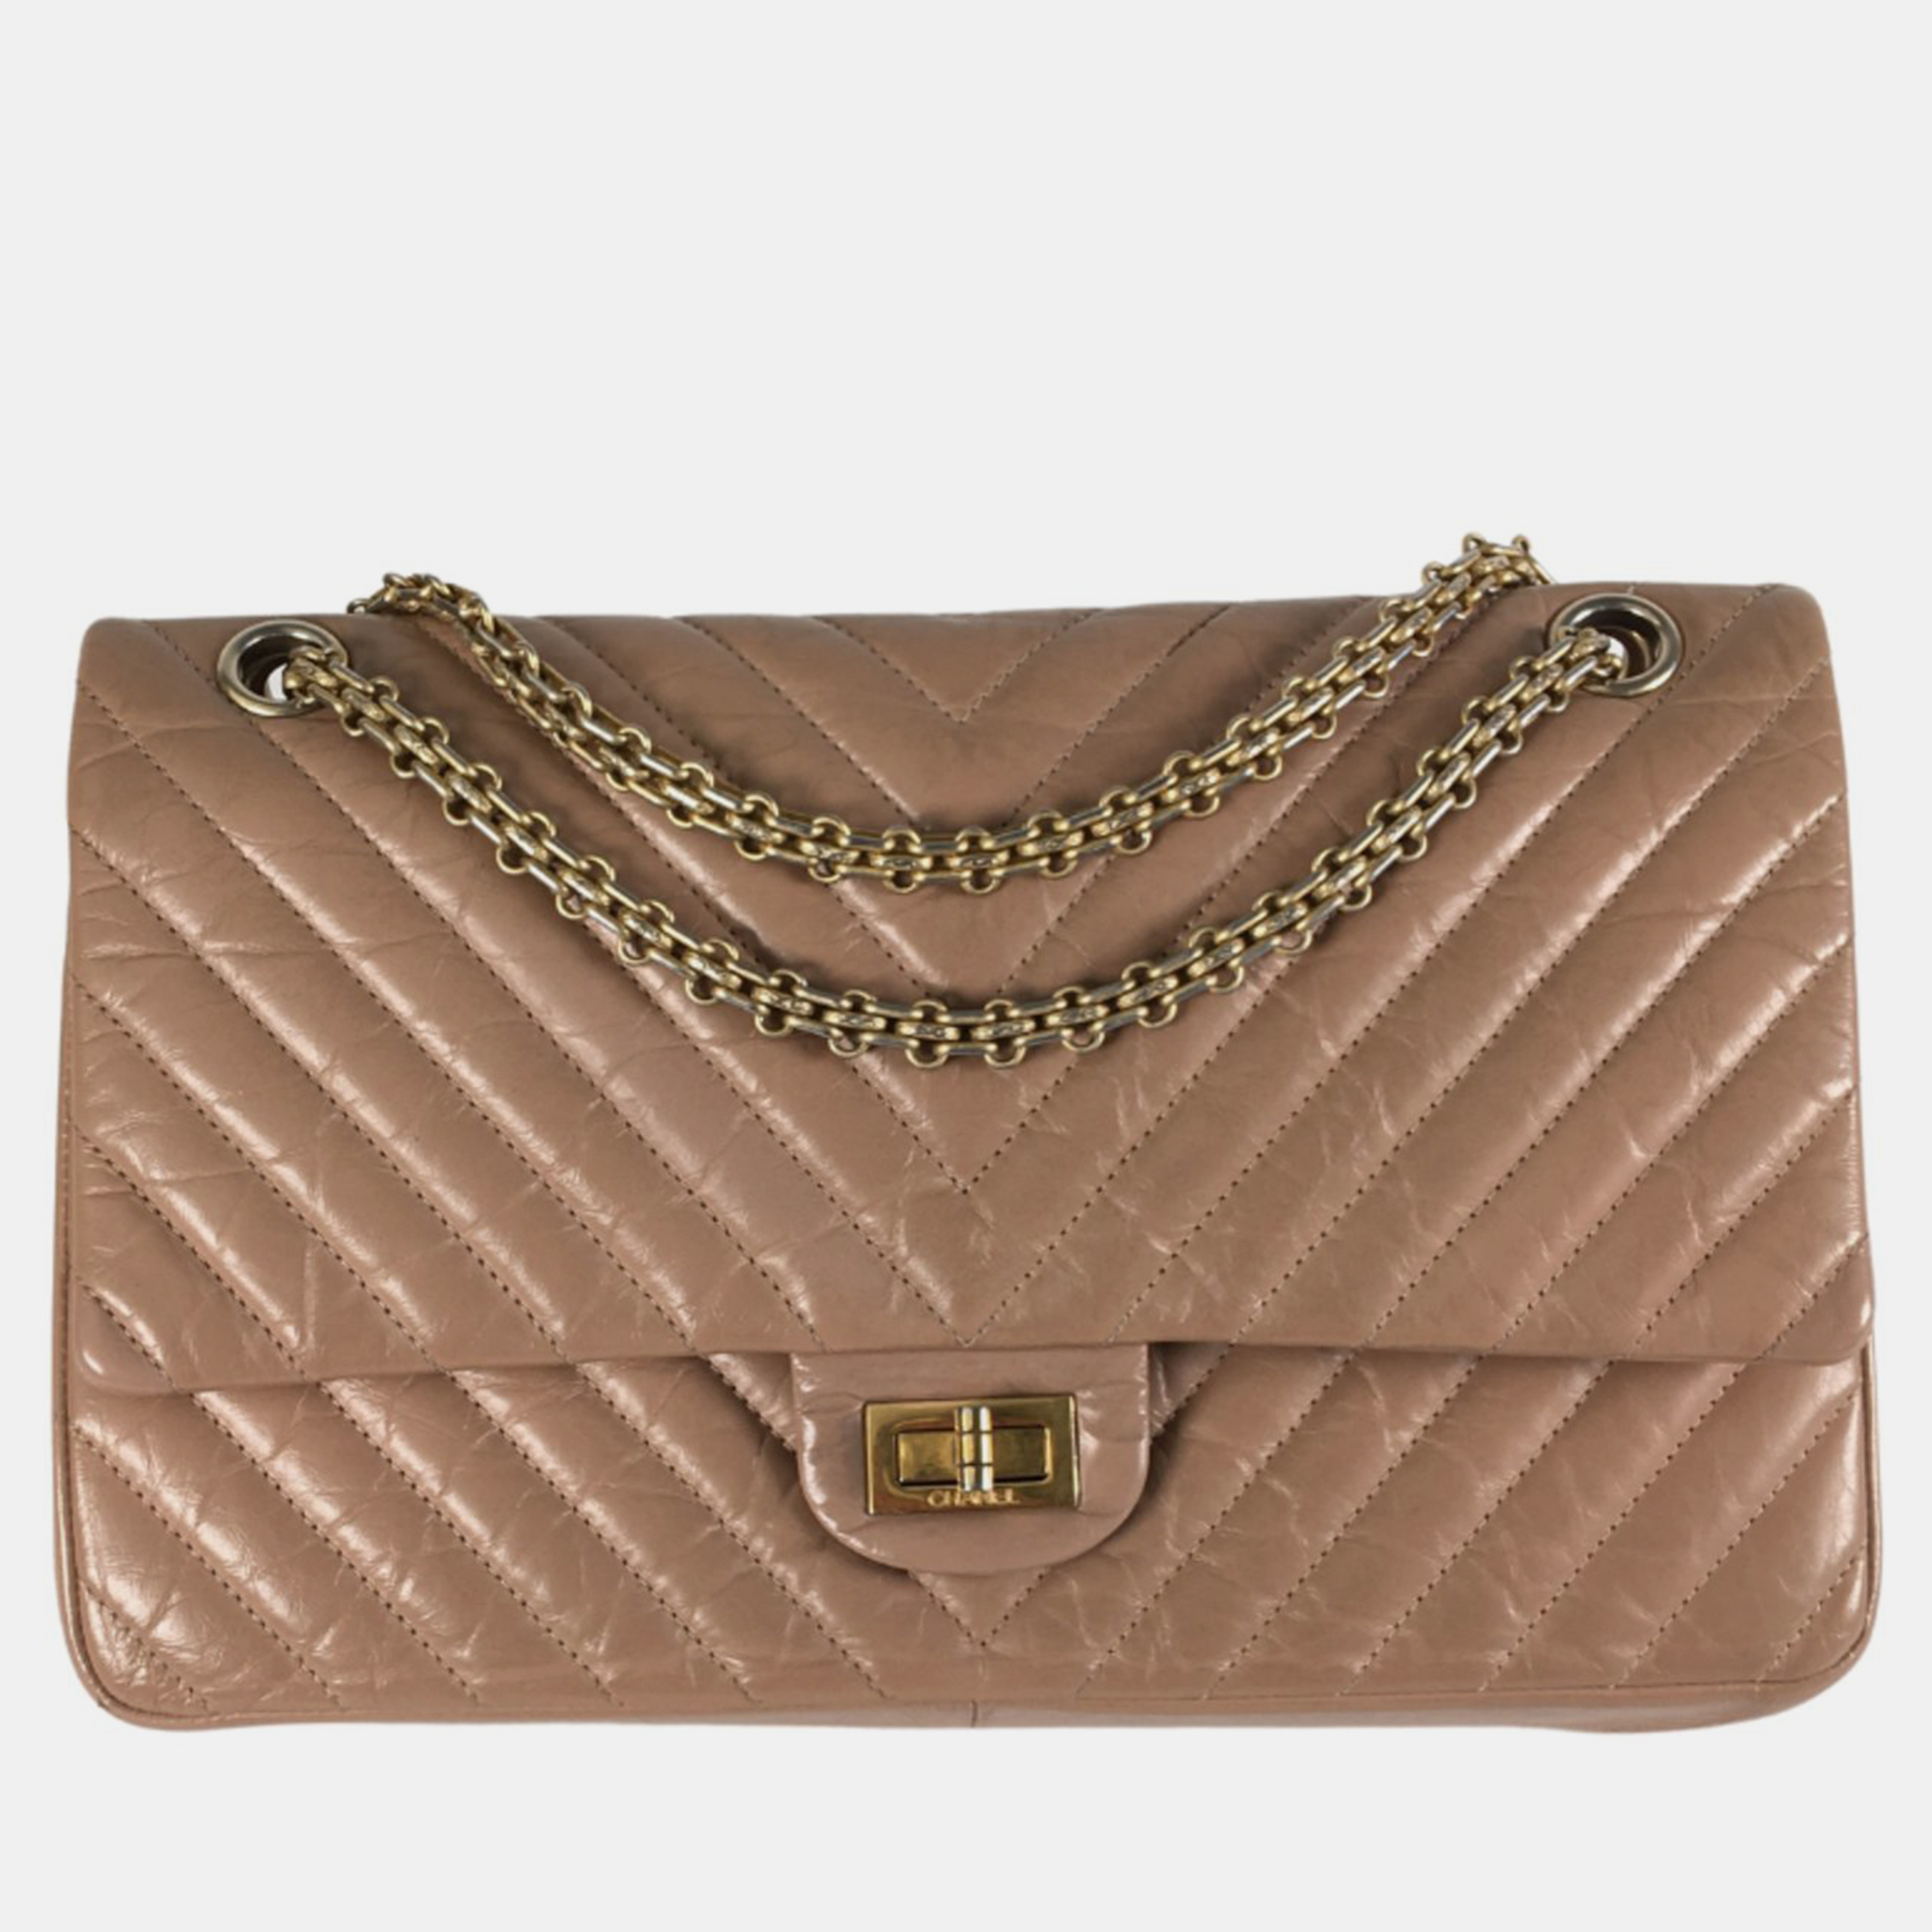 Chanel bronze chevron leather 226 reissue 2.55 flap bag